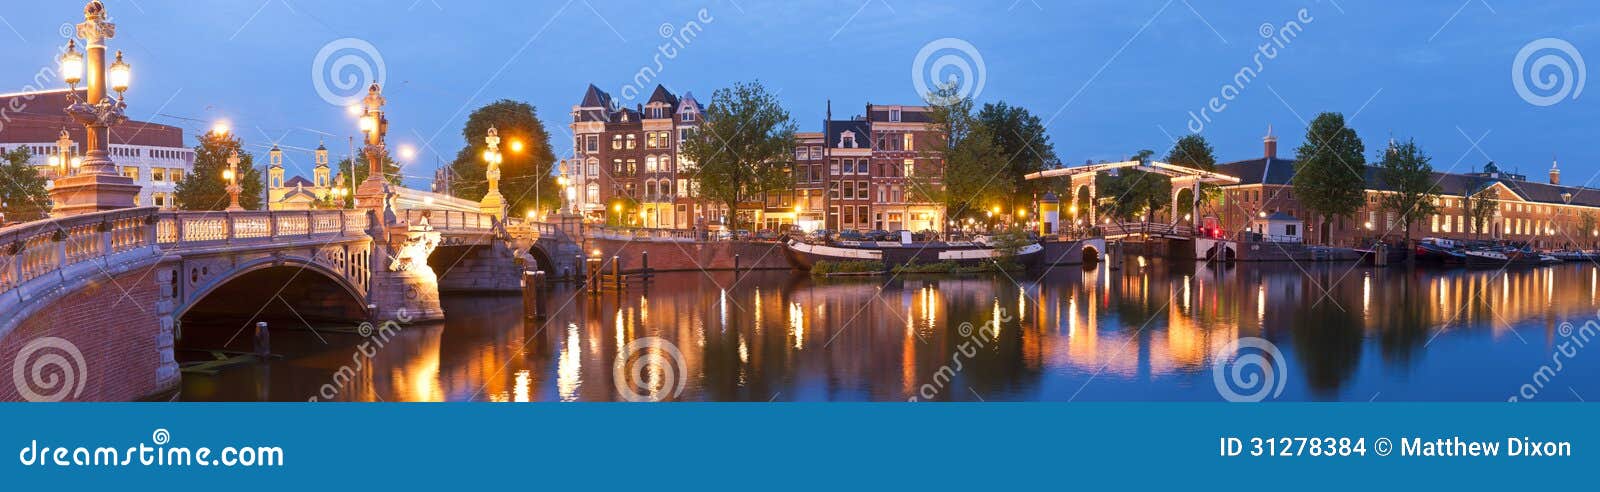 blauwbrug, amsterdam